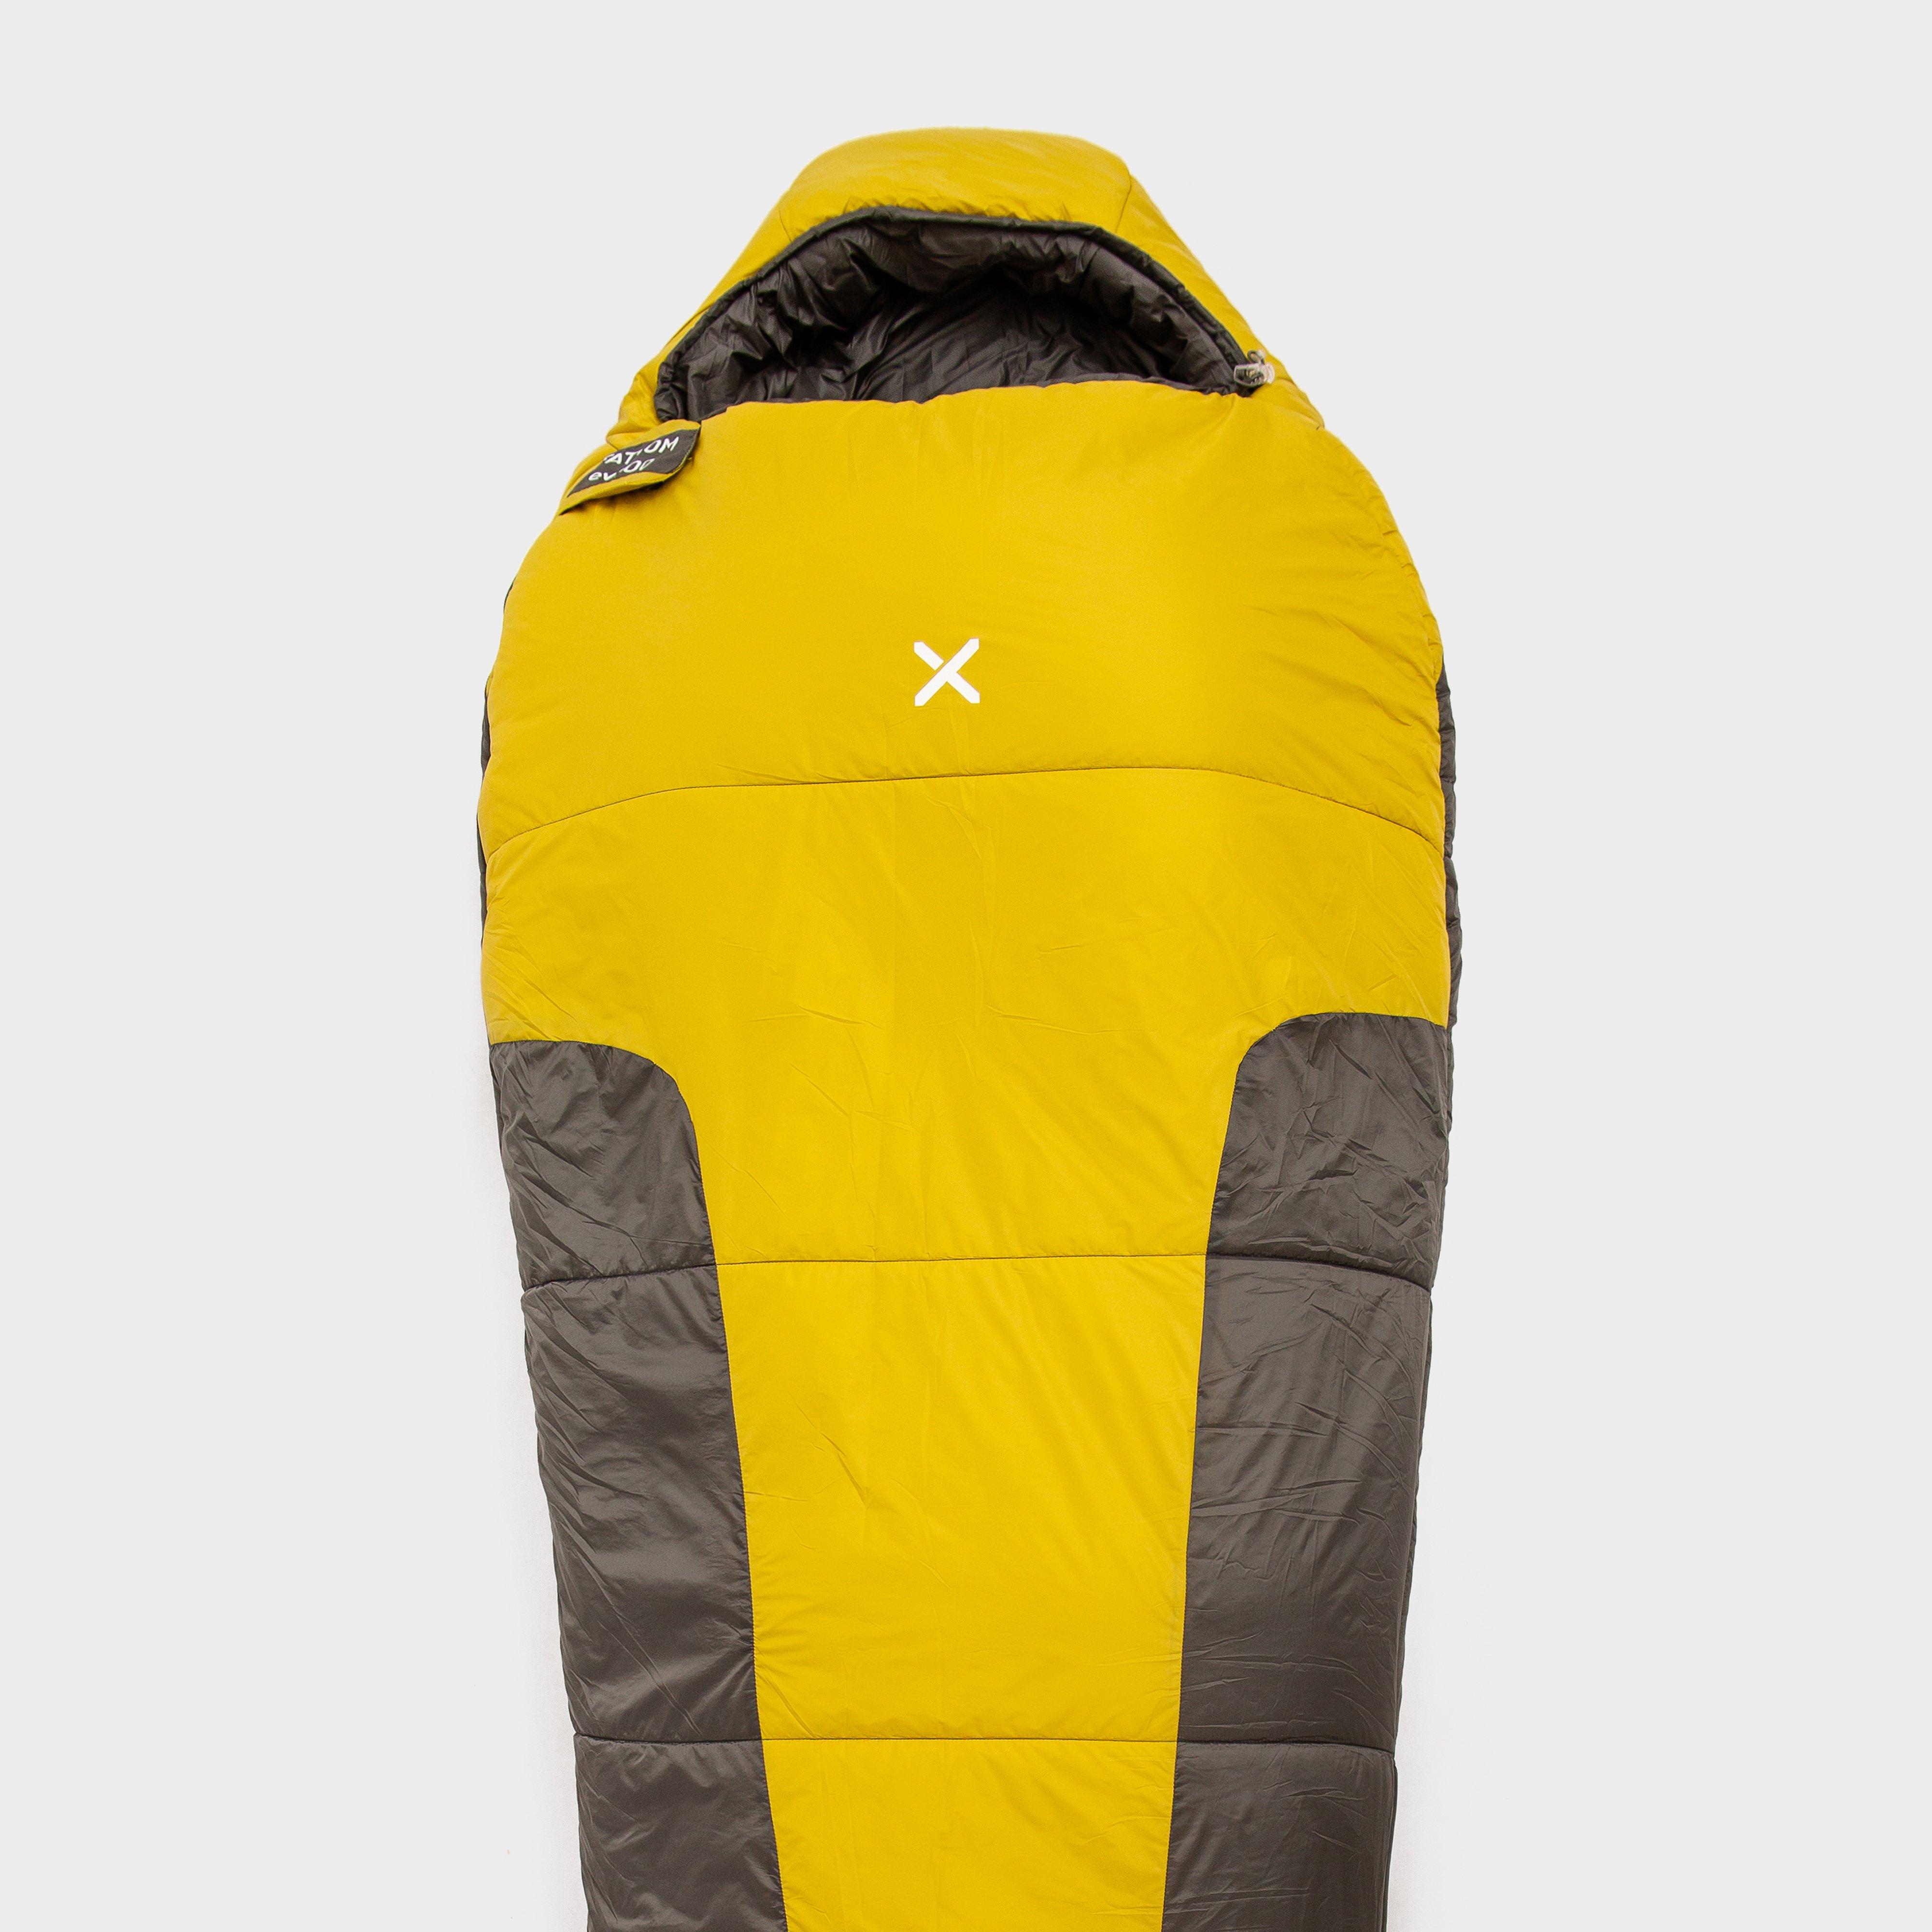 OEX Oex Fathom Ev 300 Sleeping Bag - Yellow, Yellow